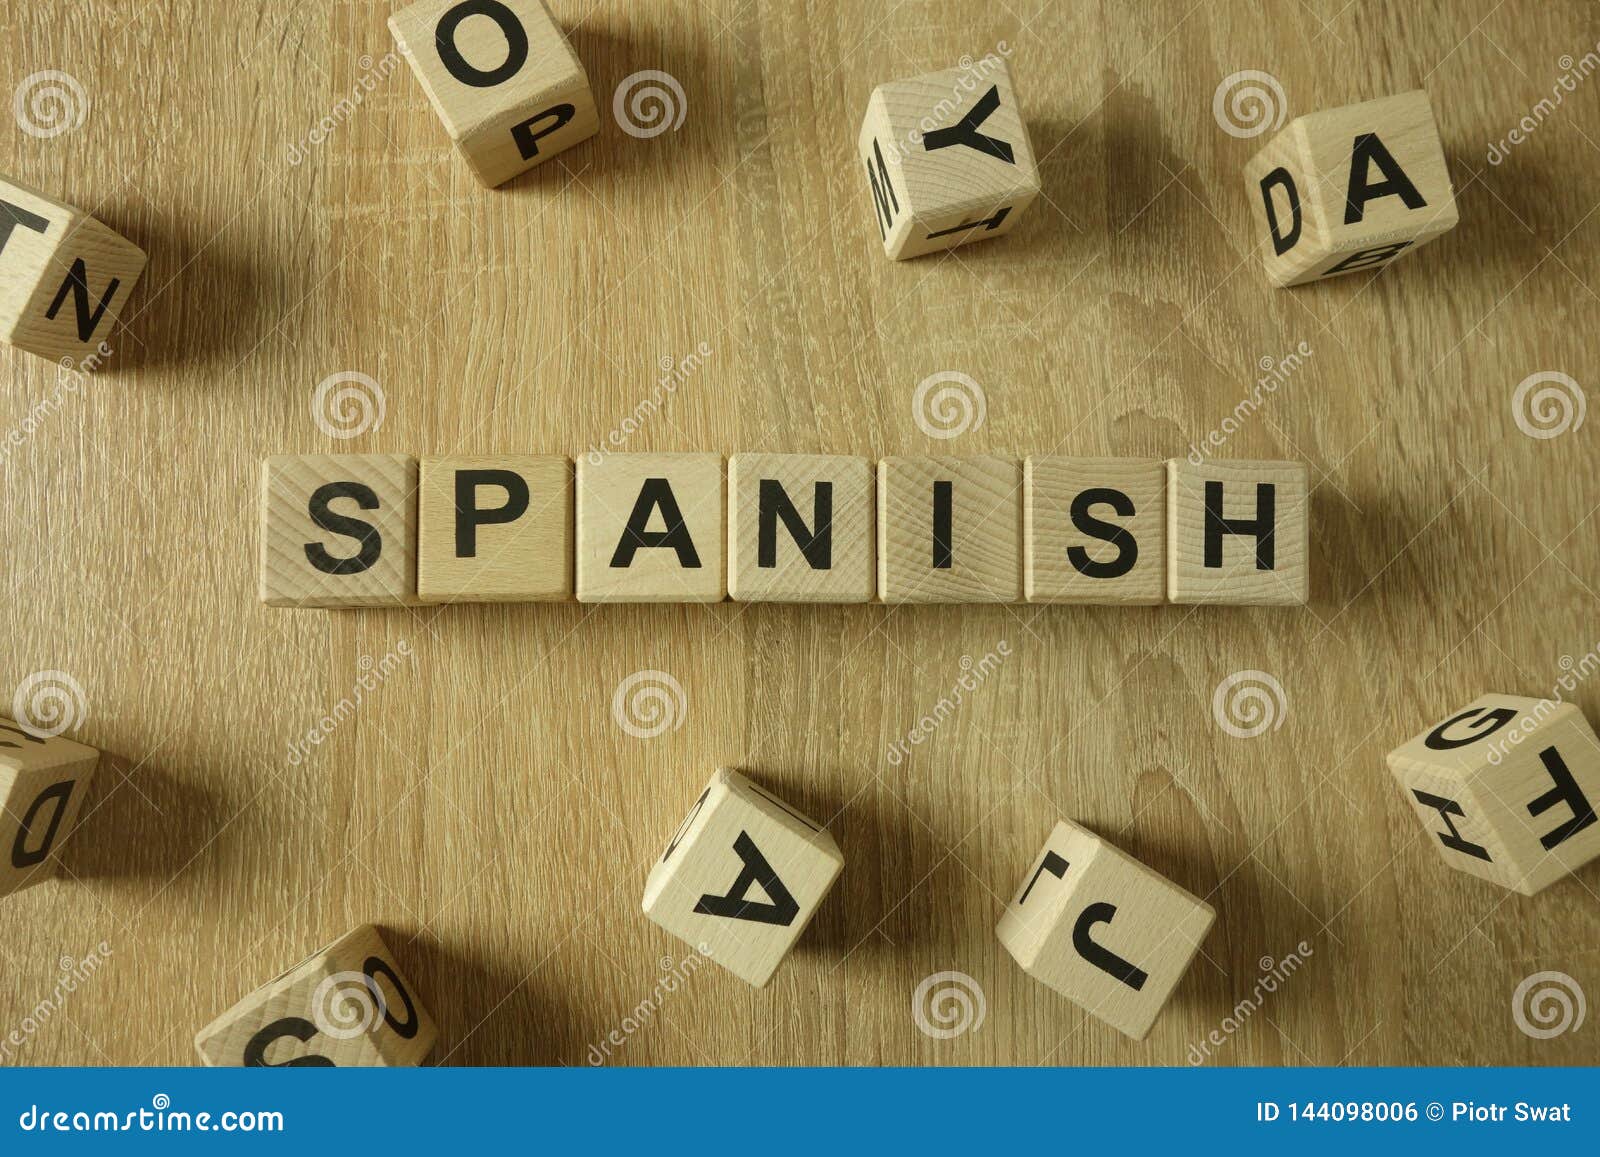 Spanish Word From Wooden Blocks Stock Photo Image Of English